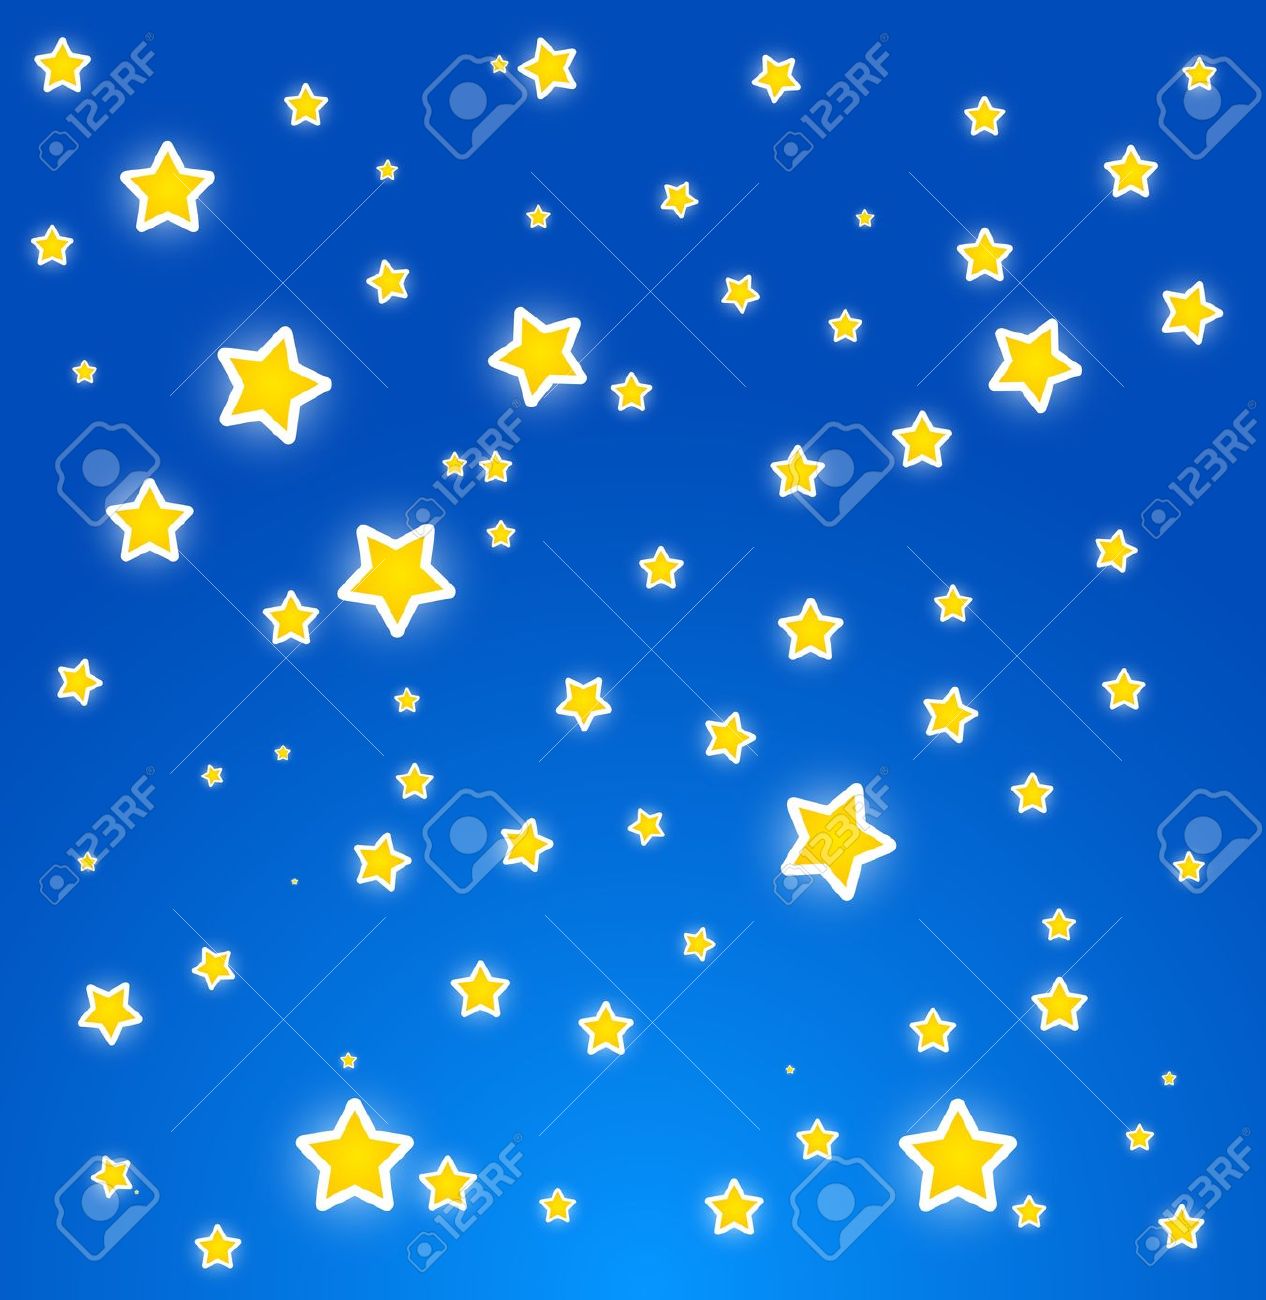 free clip art starry night sky - photo #18